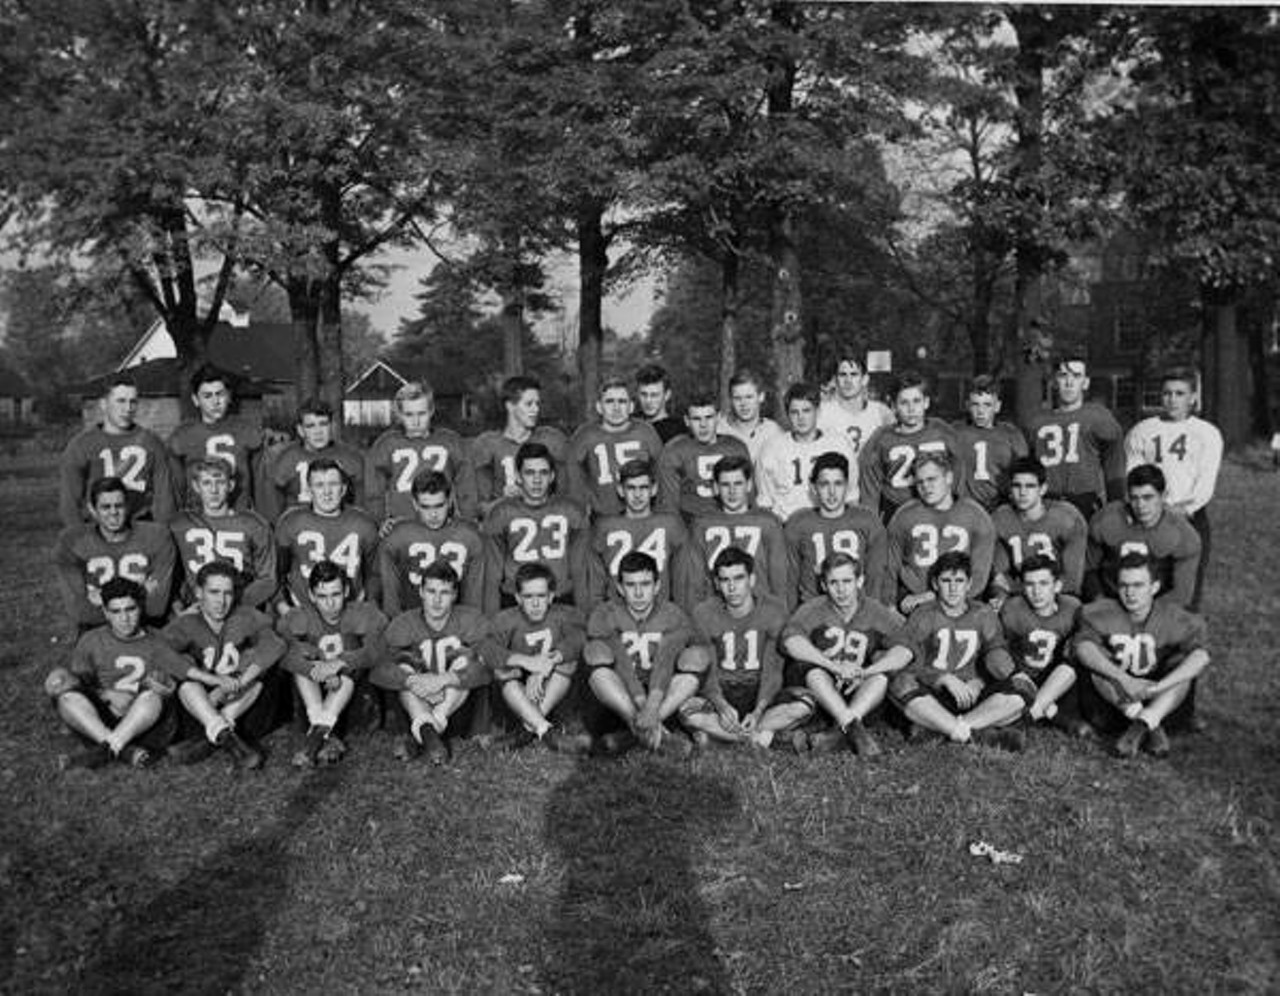  High School Football Team, 1948 